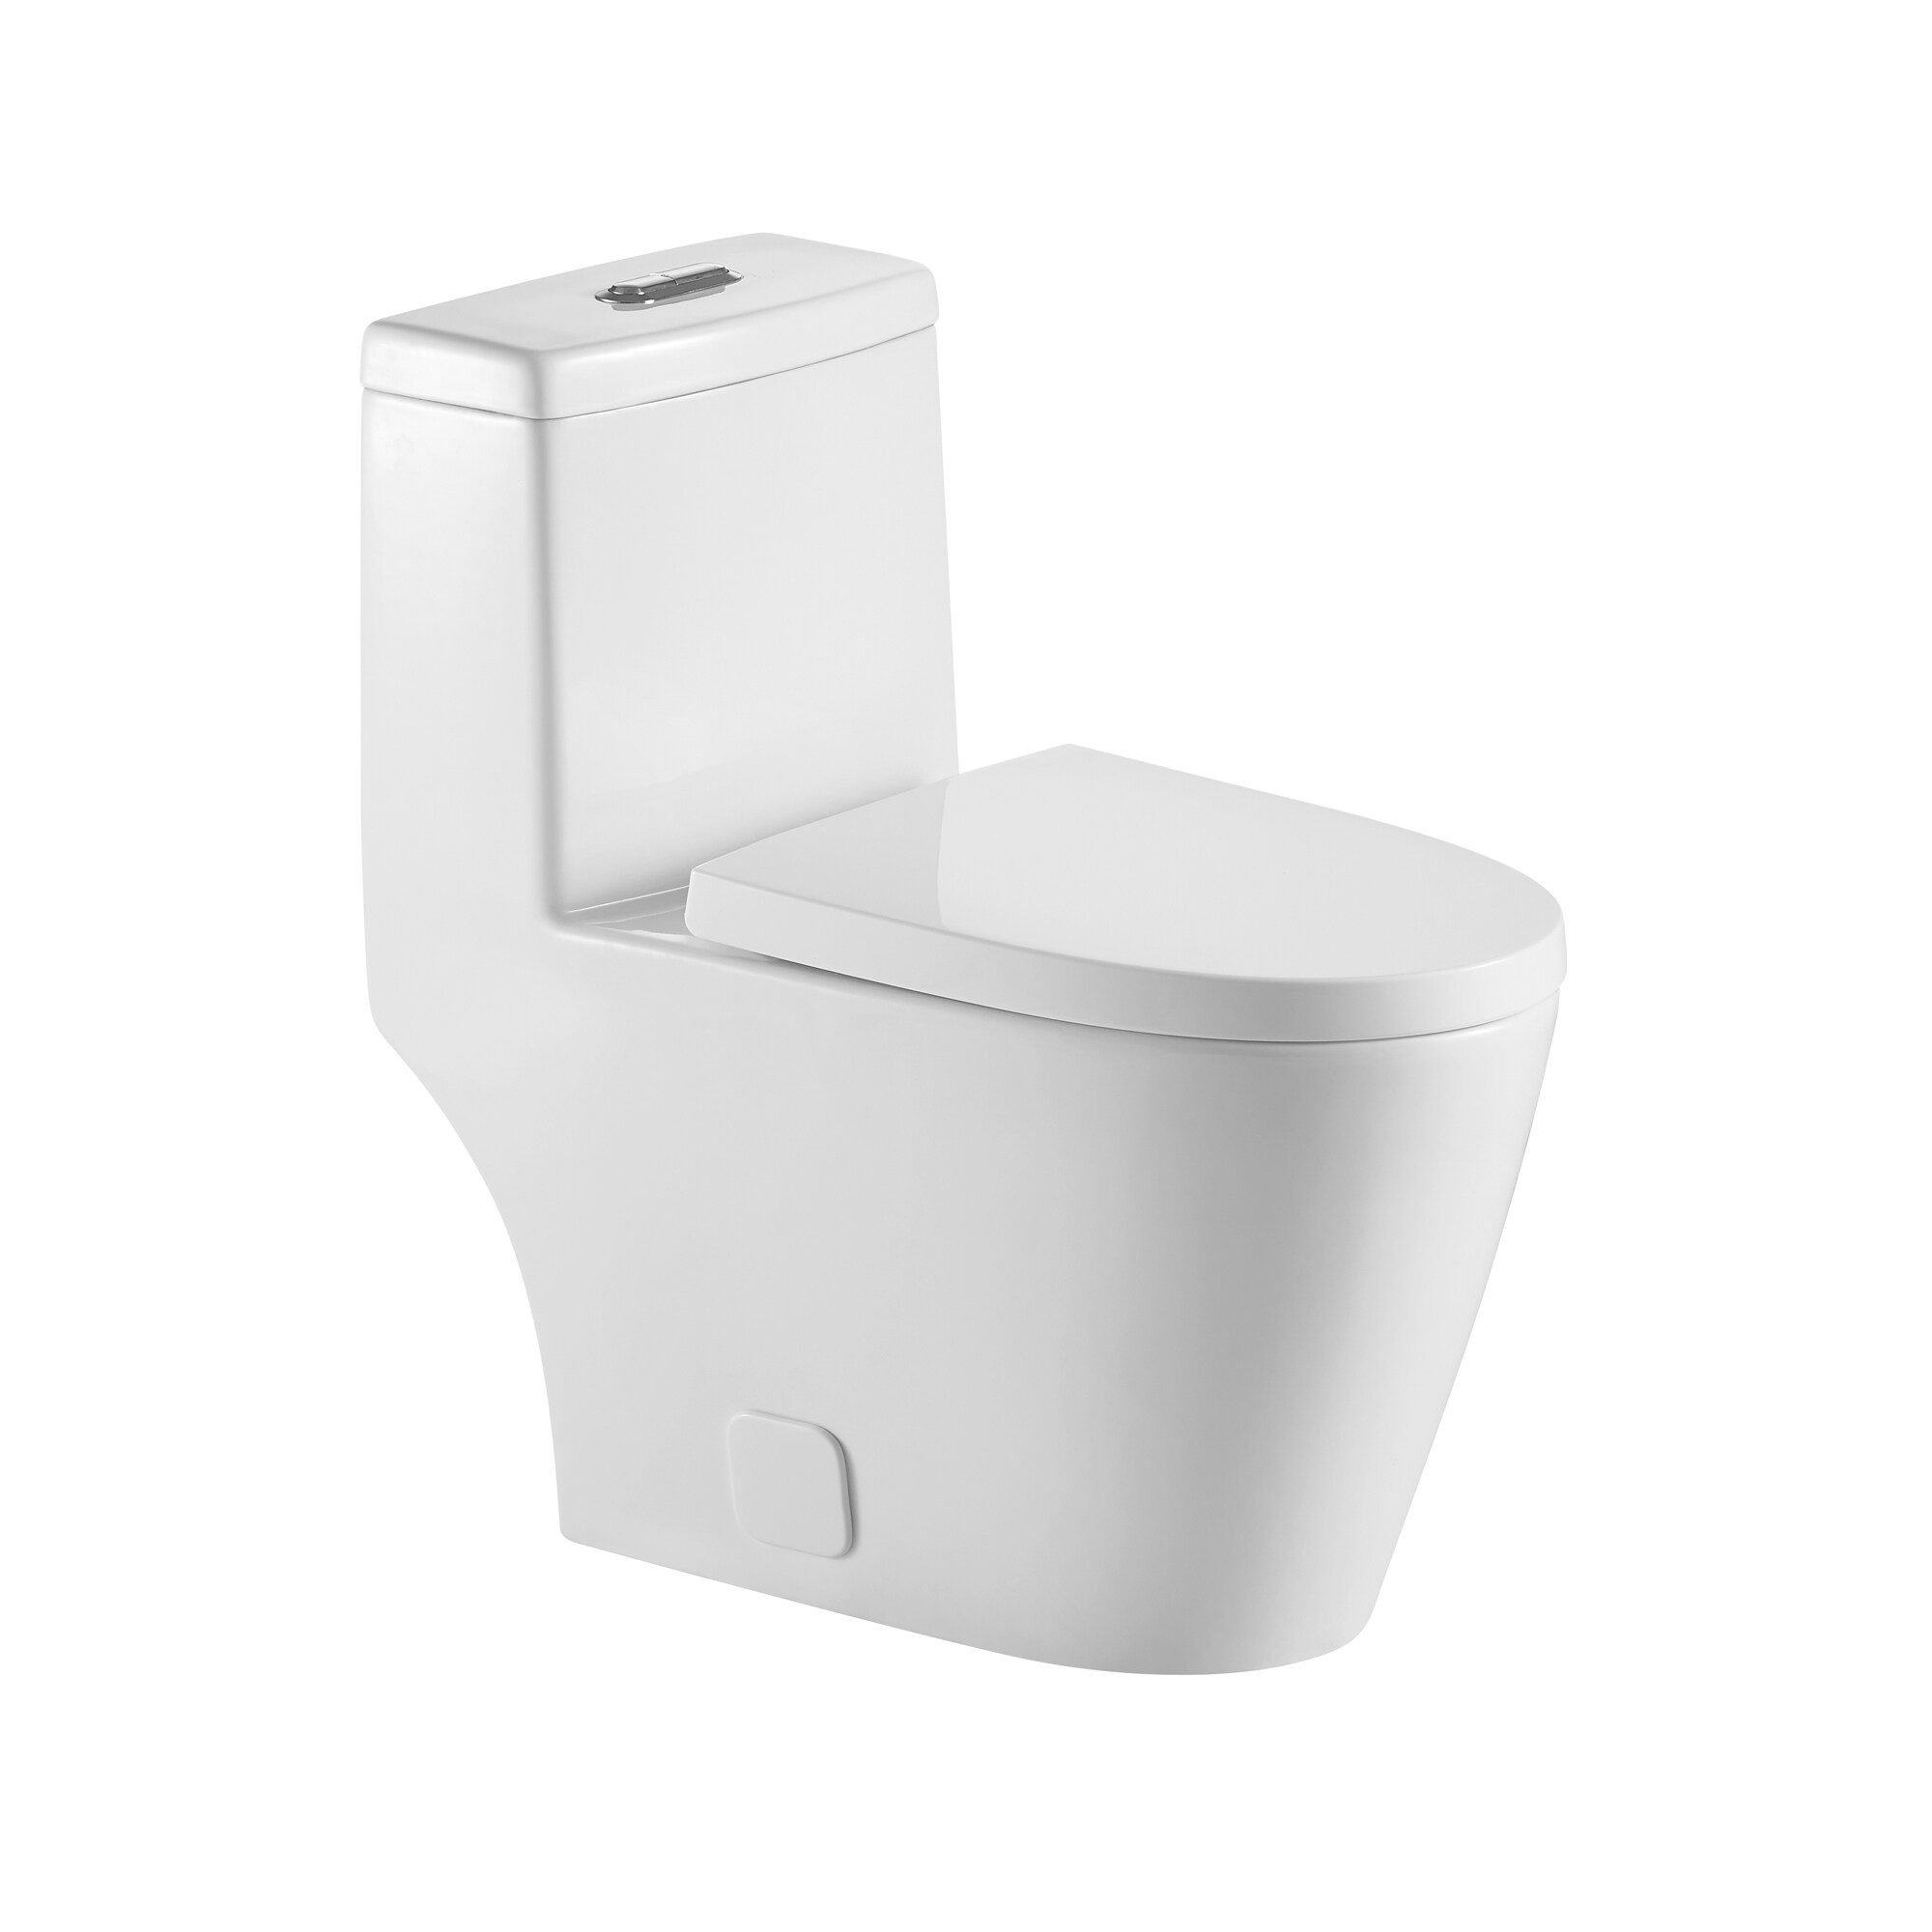 Eridanus Elongated Toilets & Toilet Seats at Lowes.com